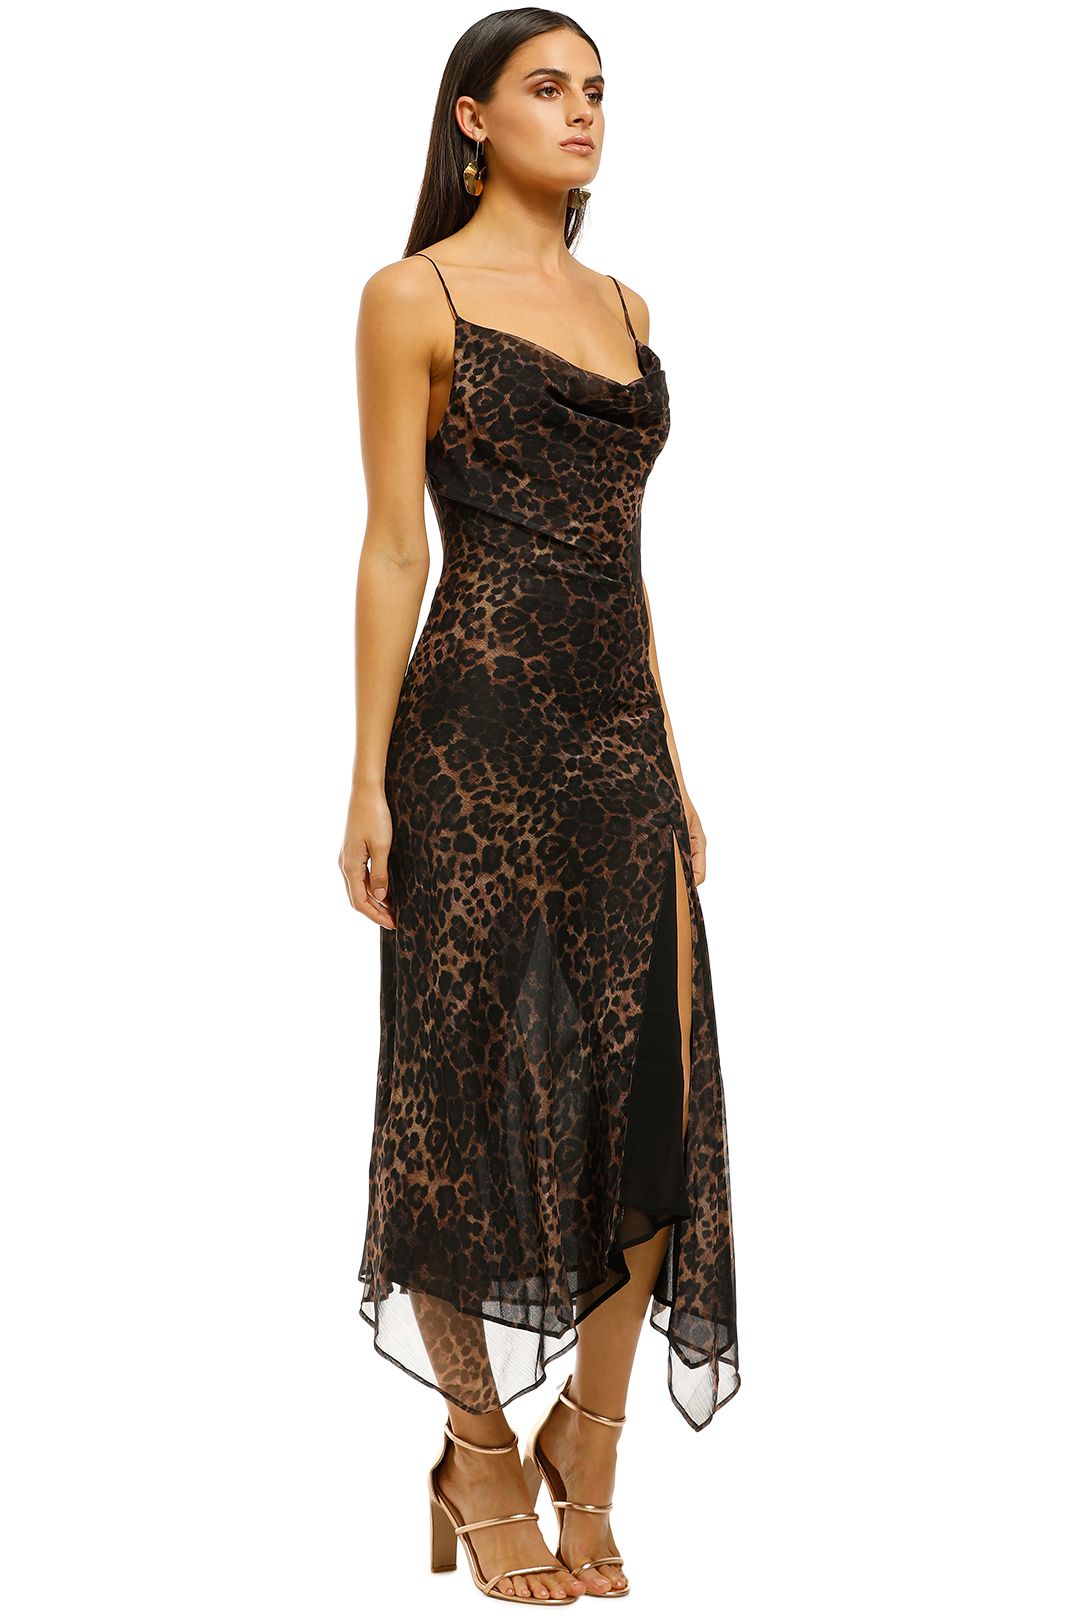 Misha-Collection-Johanna-Dress-Leopard-Side